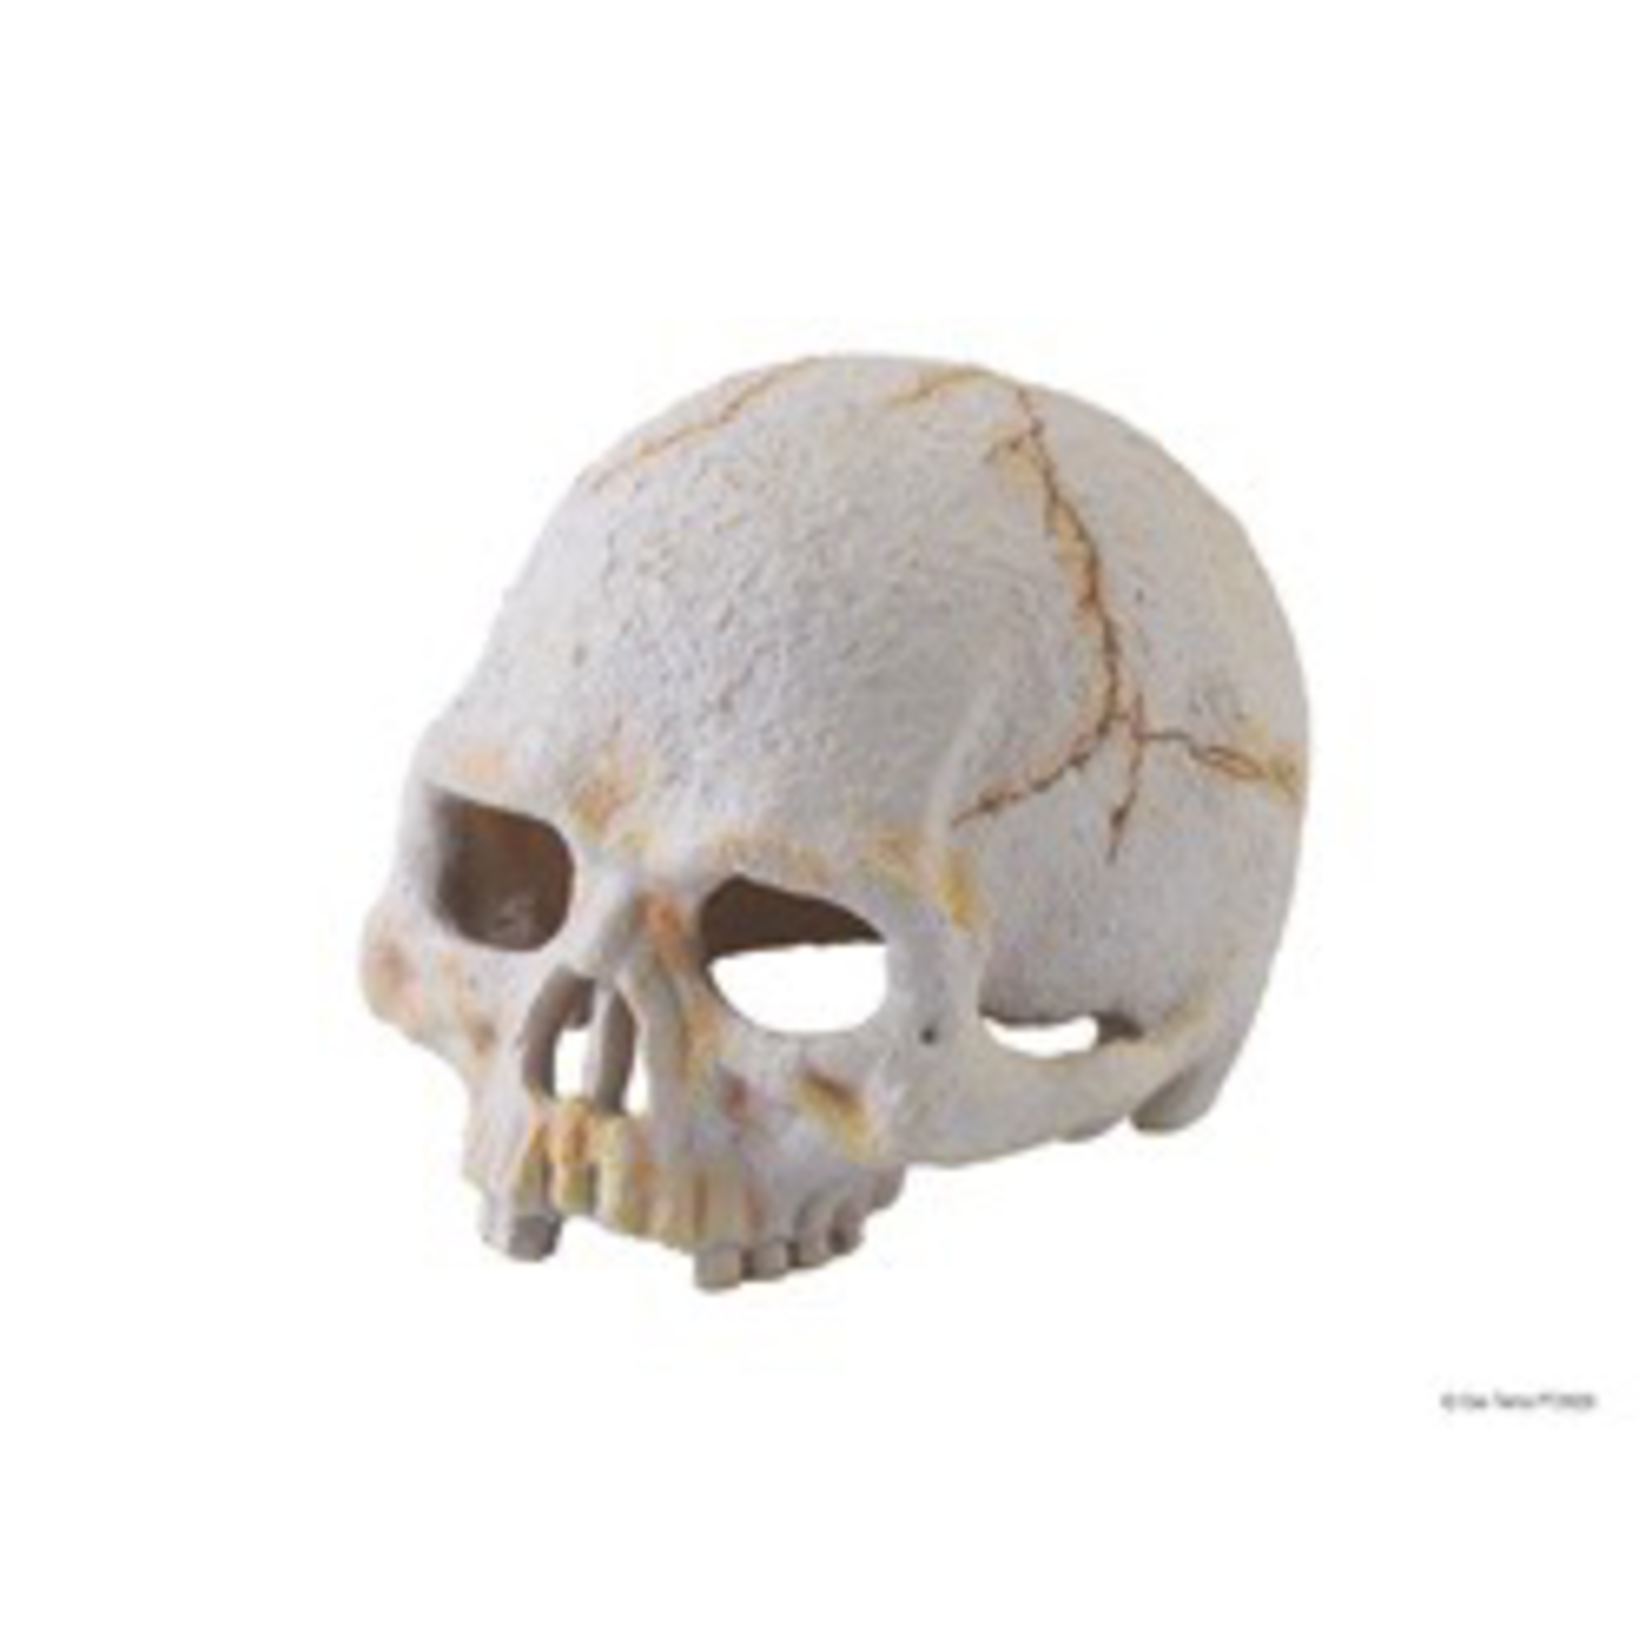 EXO TERRA Exo Terra Primate Skull - Small